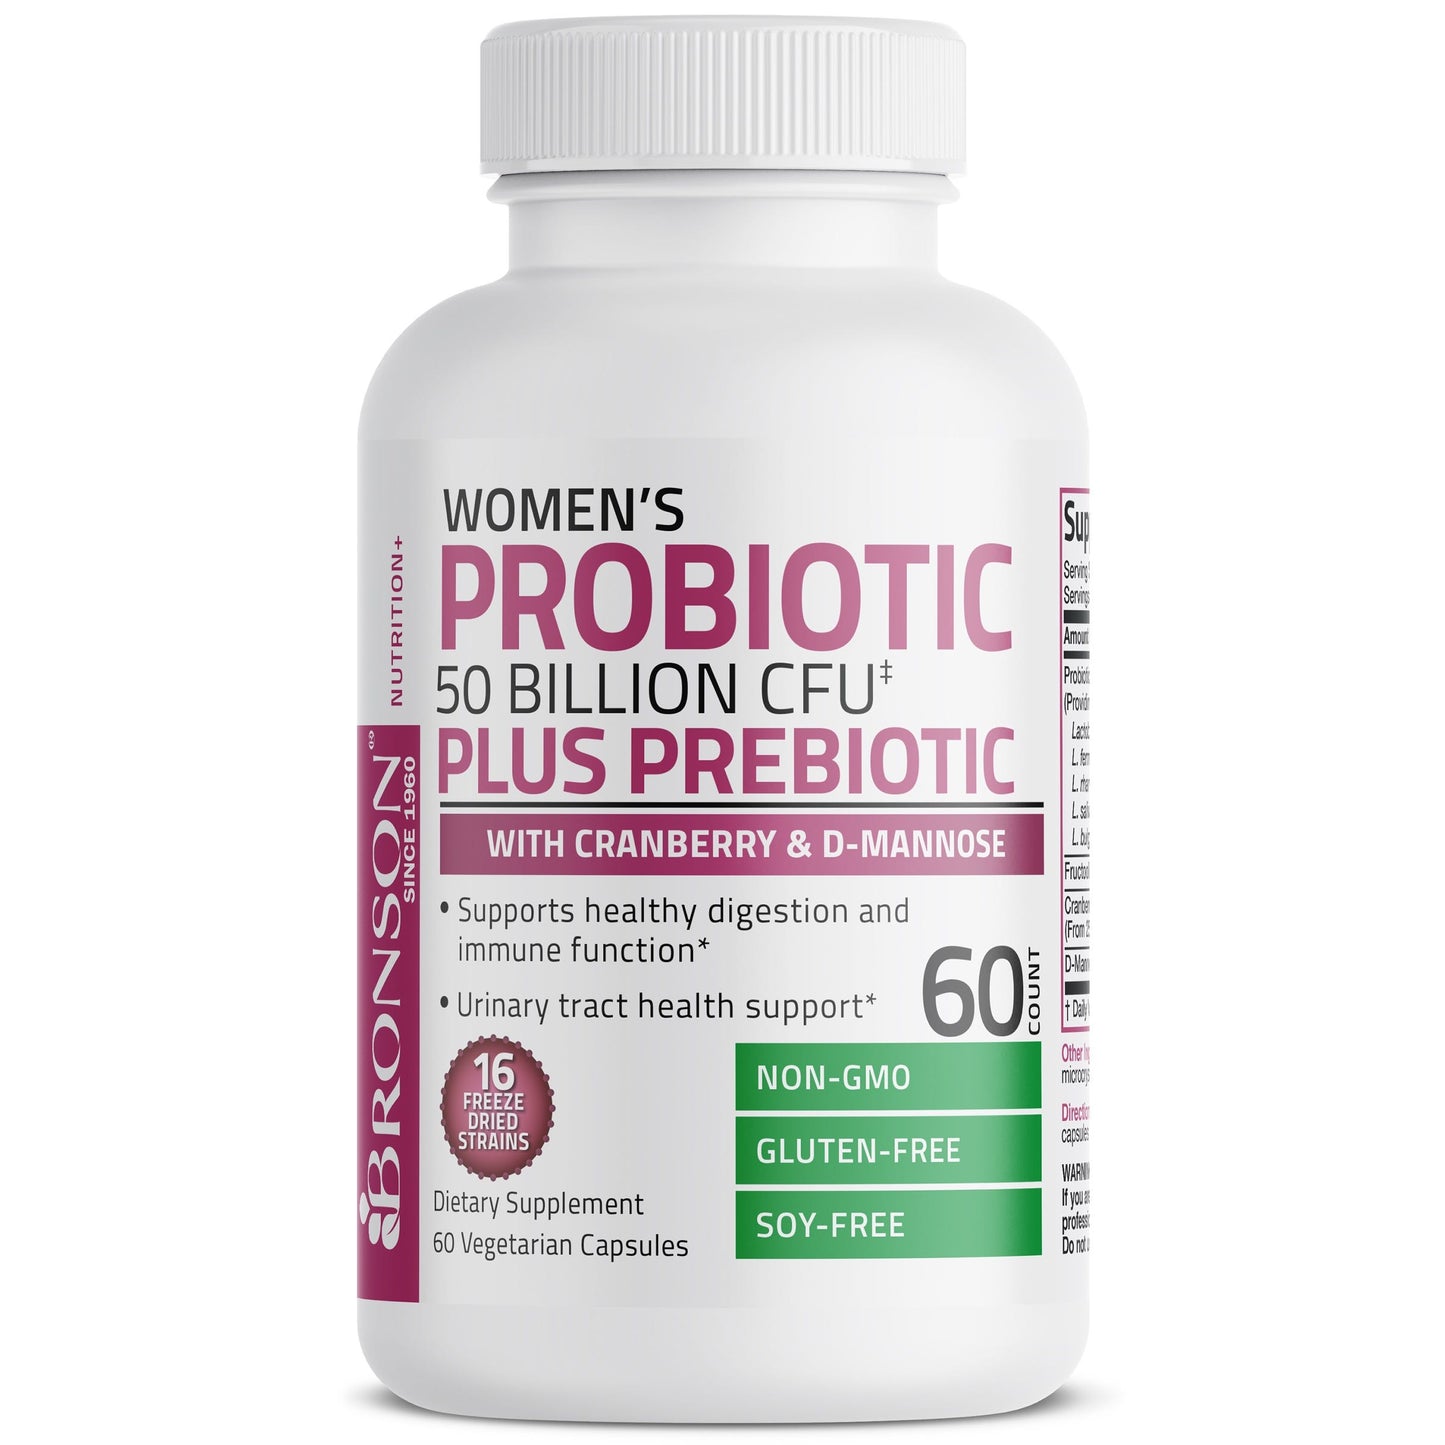 Probiotic Plus Prebiotic For Women - 50 Billion CFU - 60 Vegetarian Capsules